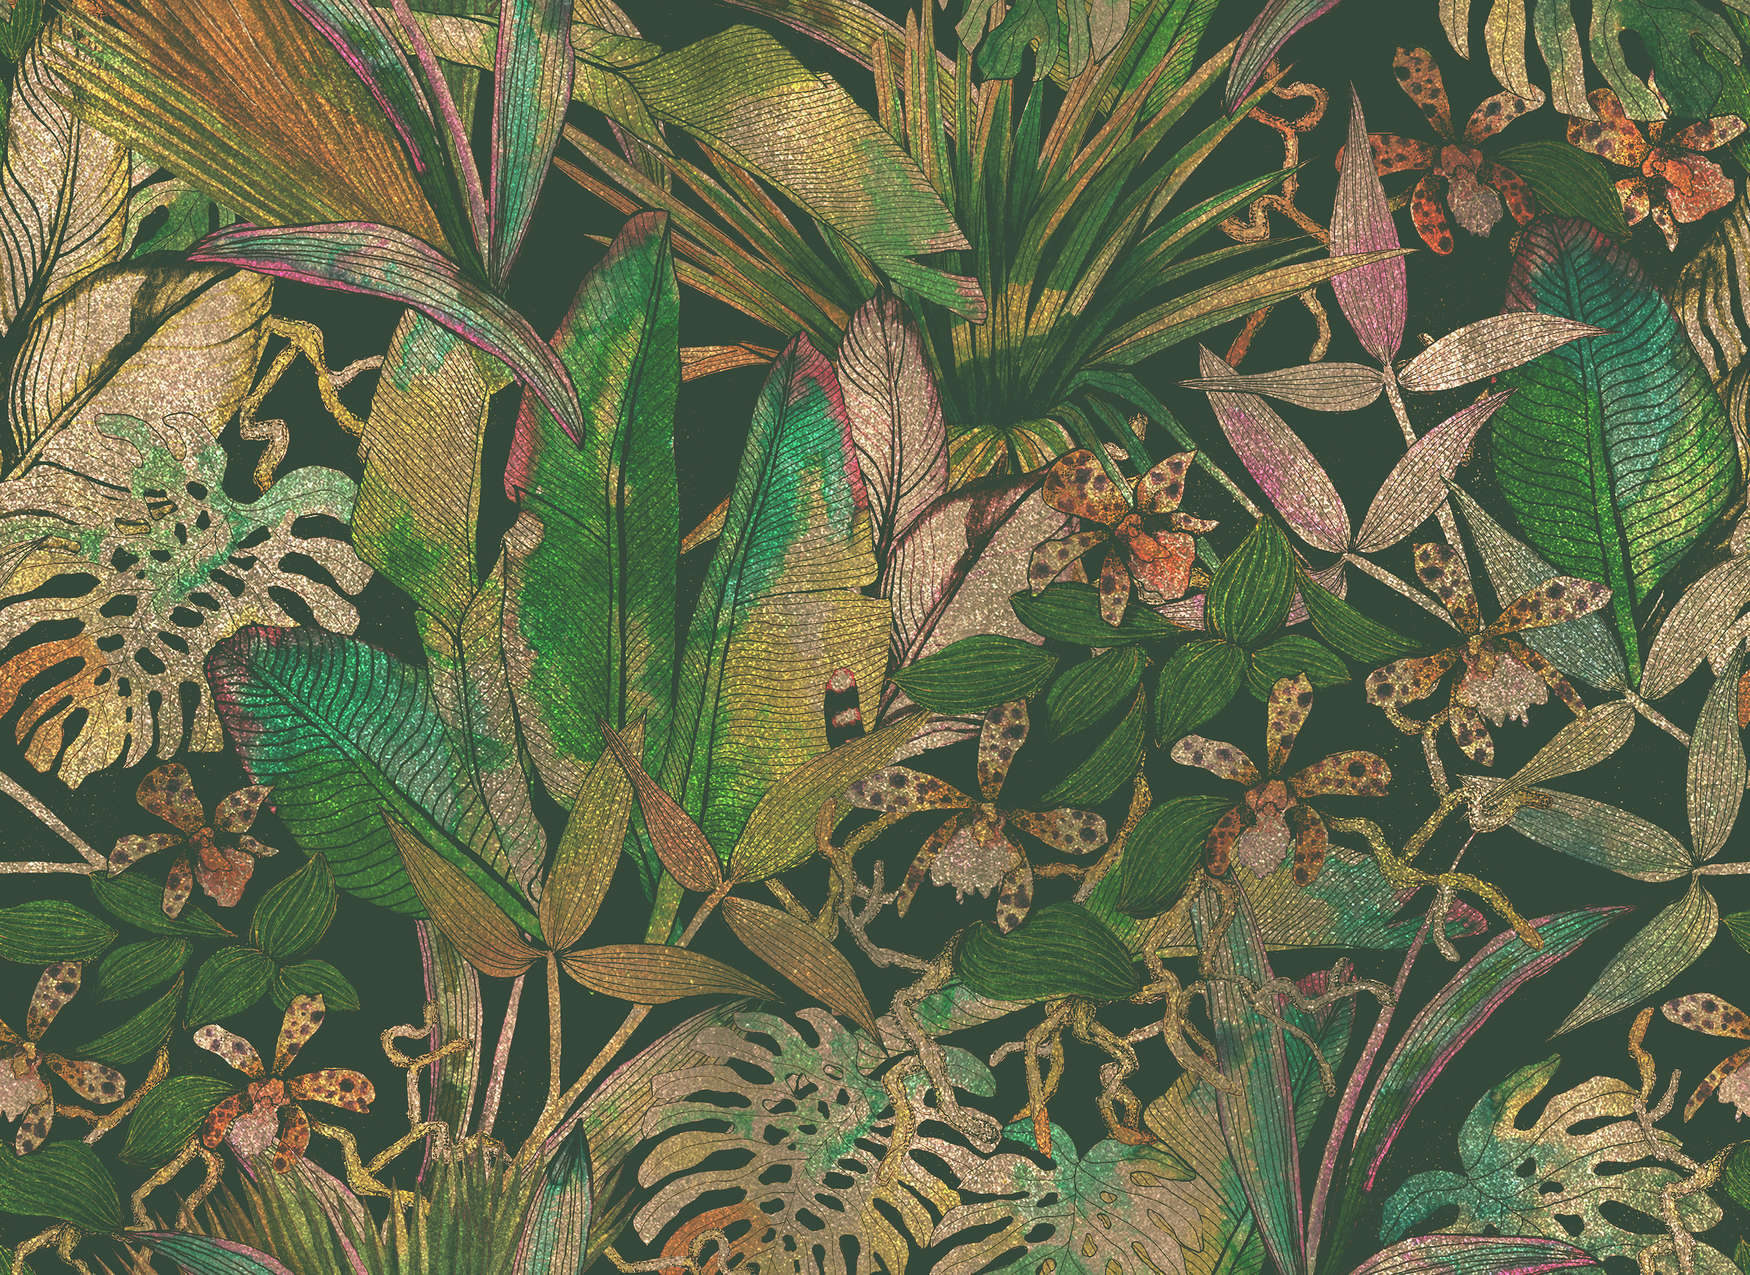             Papier peint motif jungle avec feuilles et fleurs - vert, beige
        